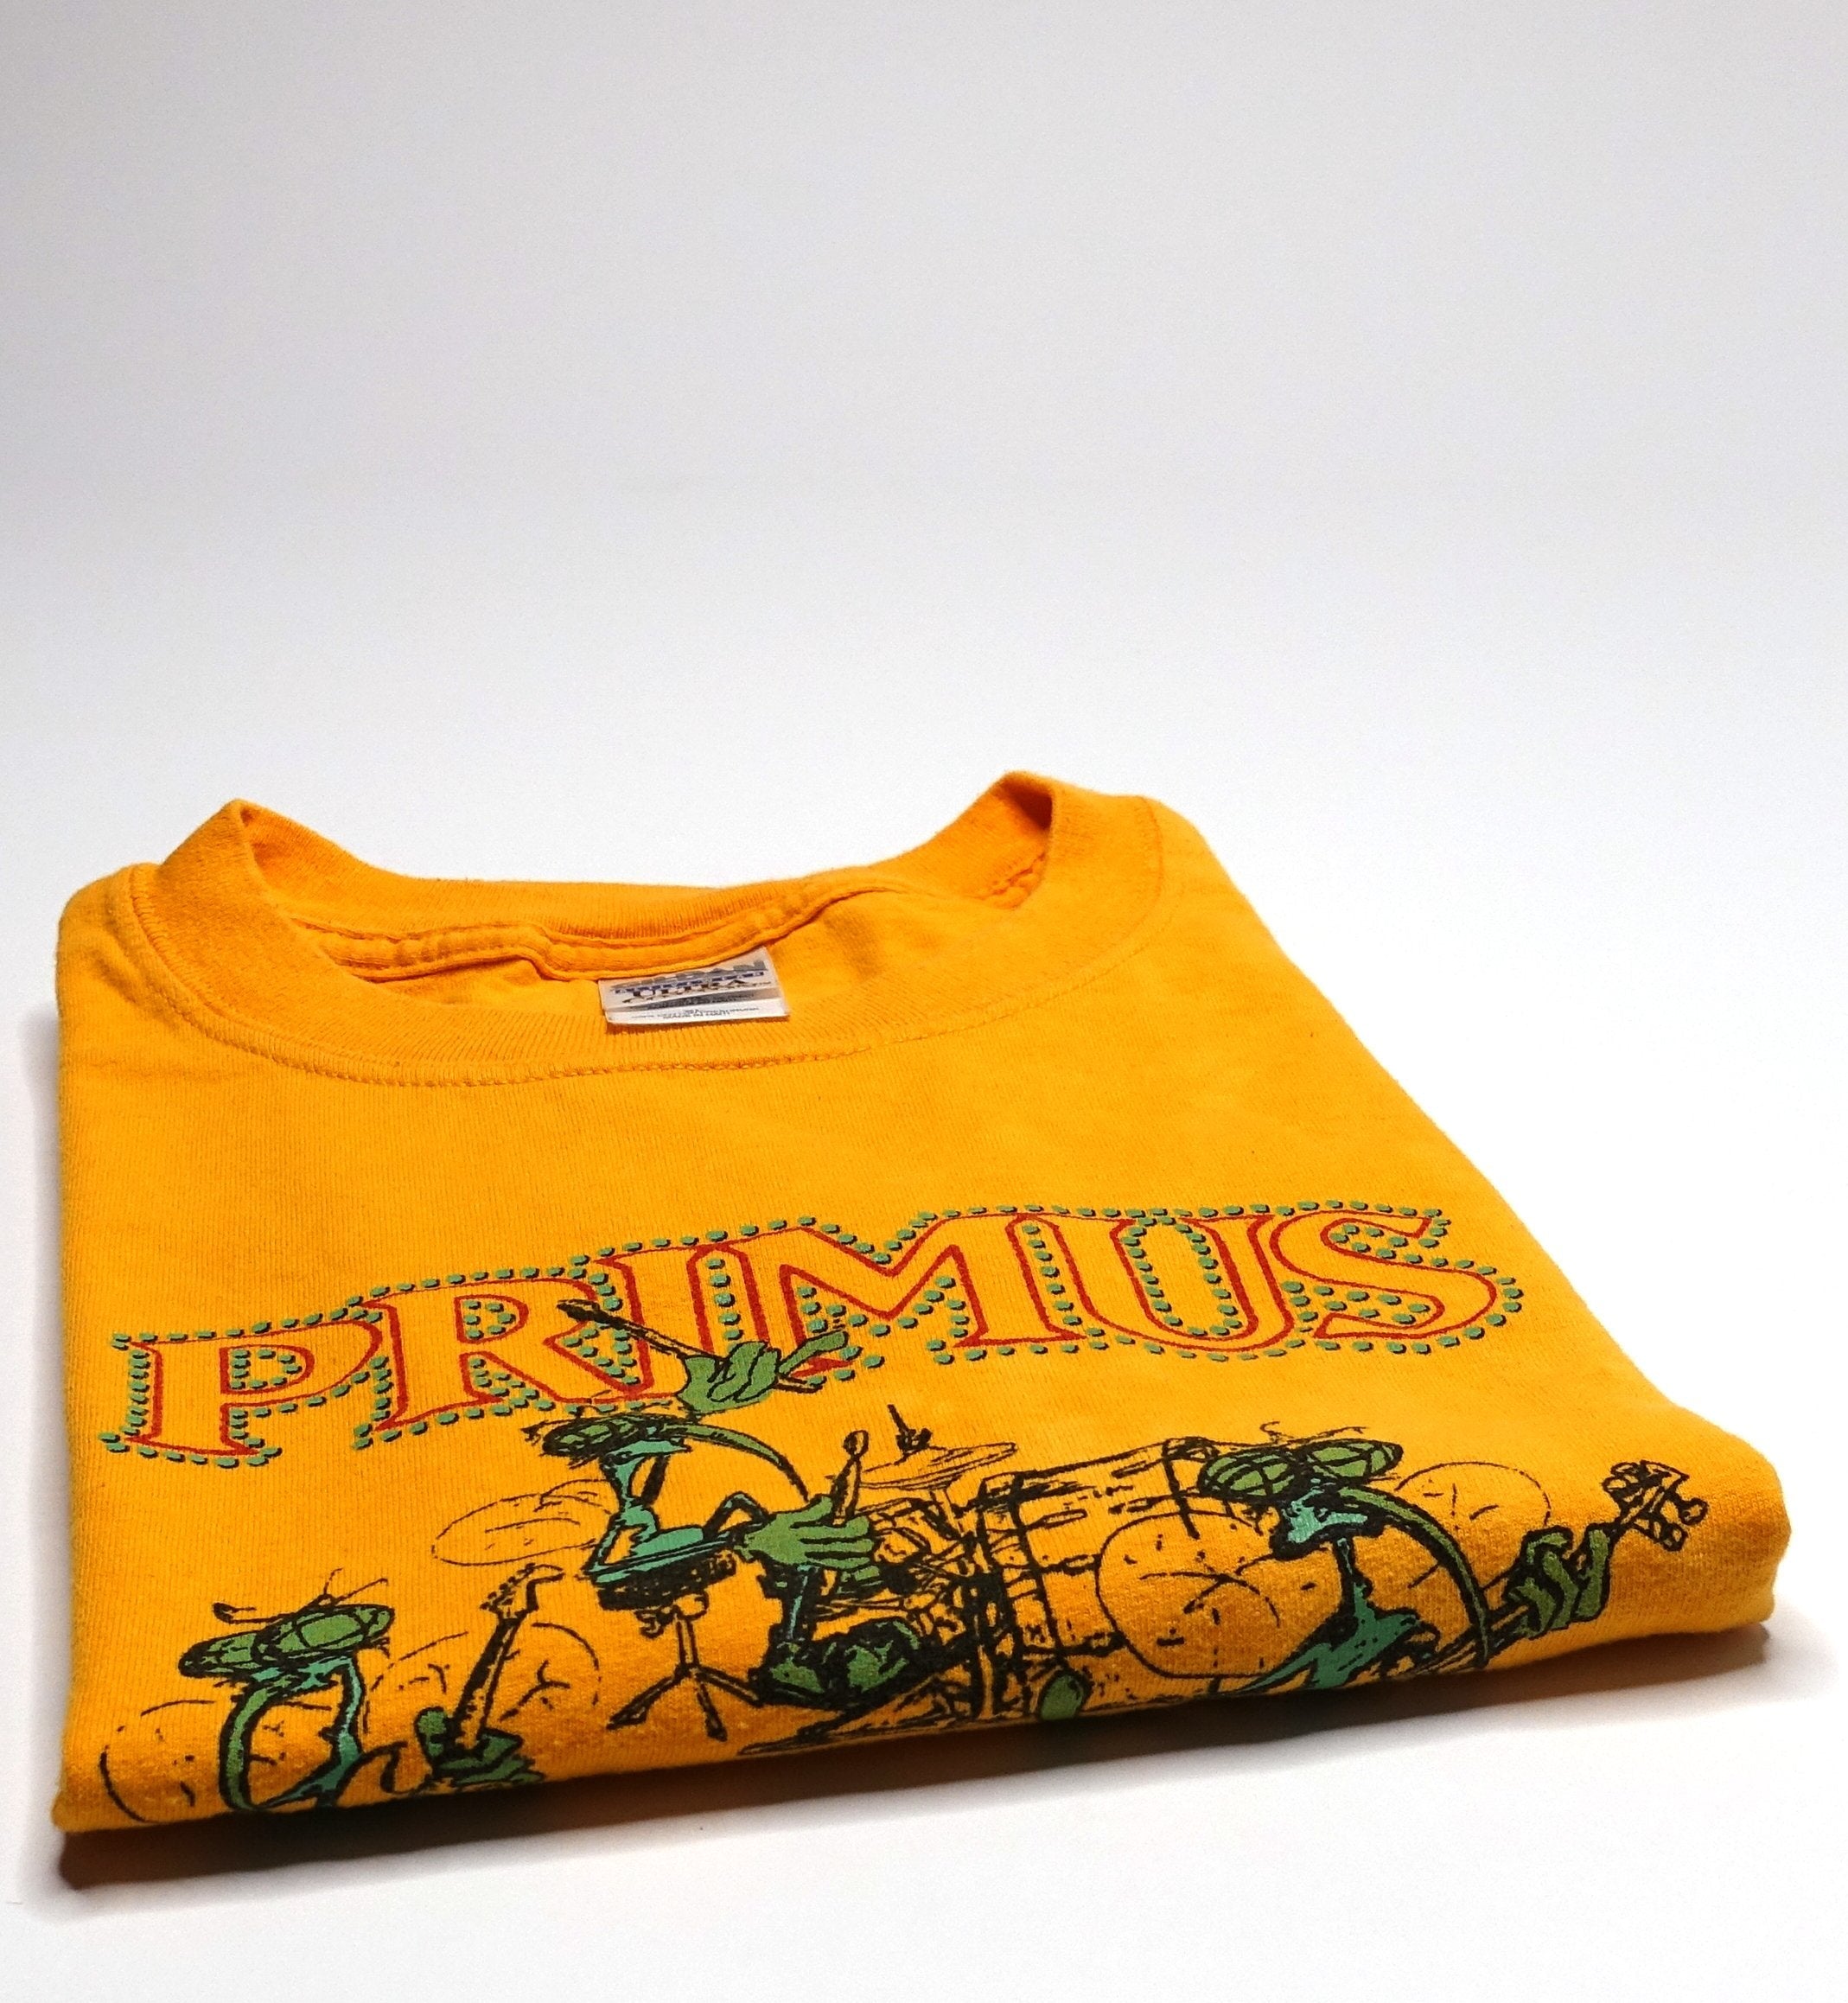 Primus - Mosquito Band 2002 Tour Shirt Size XL